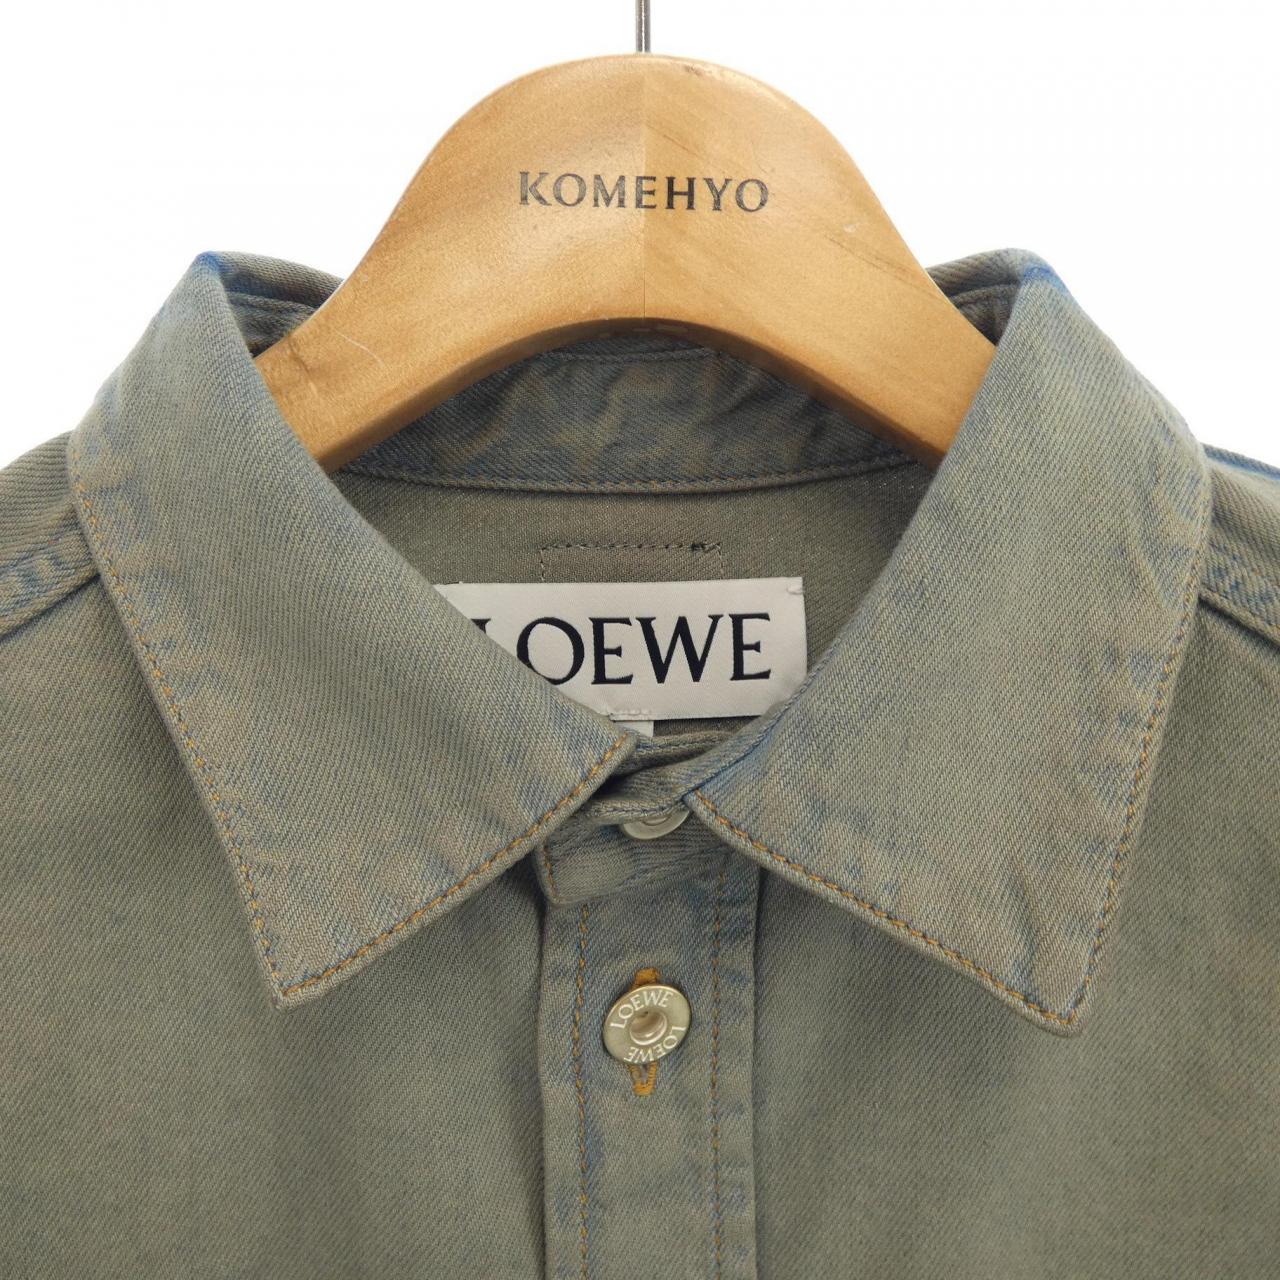 Loewe LOEWE shirt